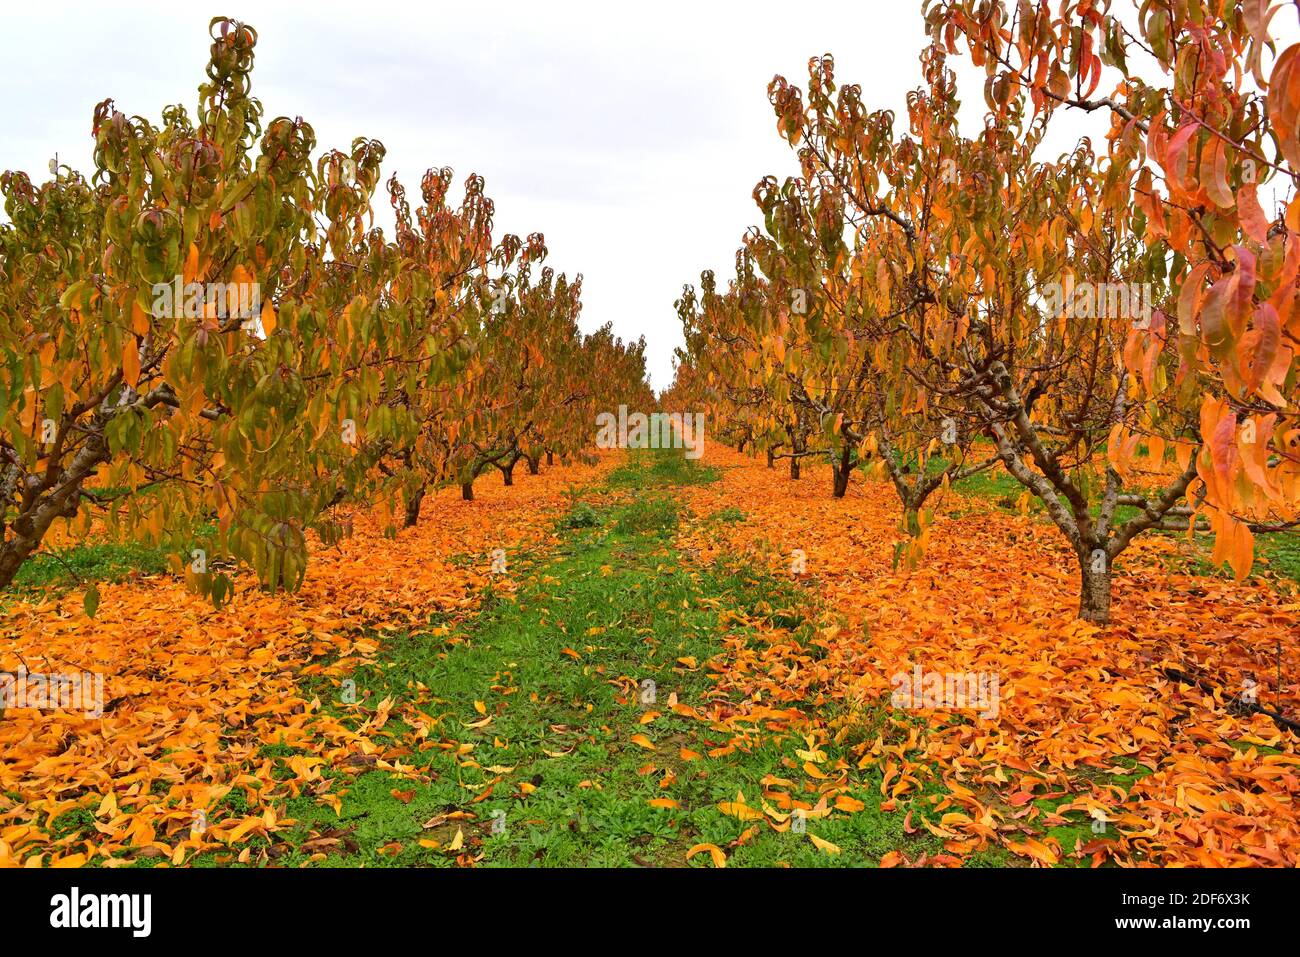 Peach field (Prunus persica) in autumn. This photo was taken in Torres de Segre, Lleida province, Catalonia, Spain. Stock Photo